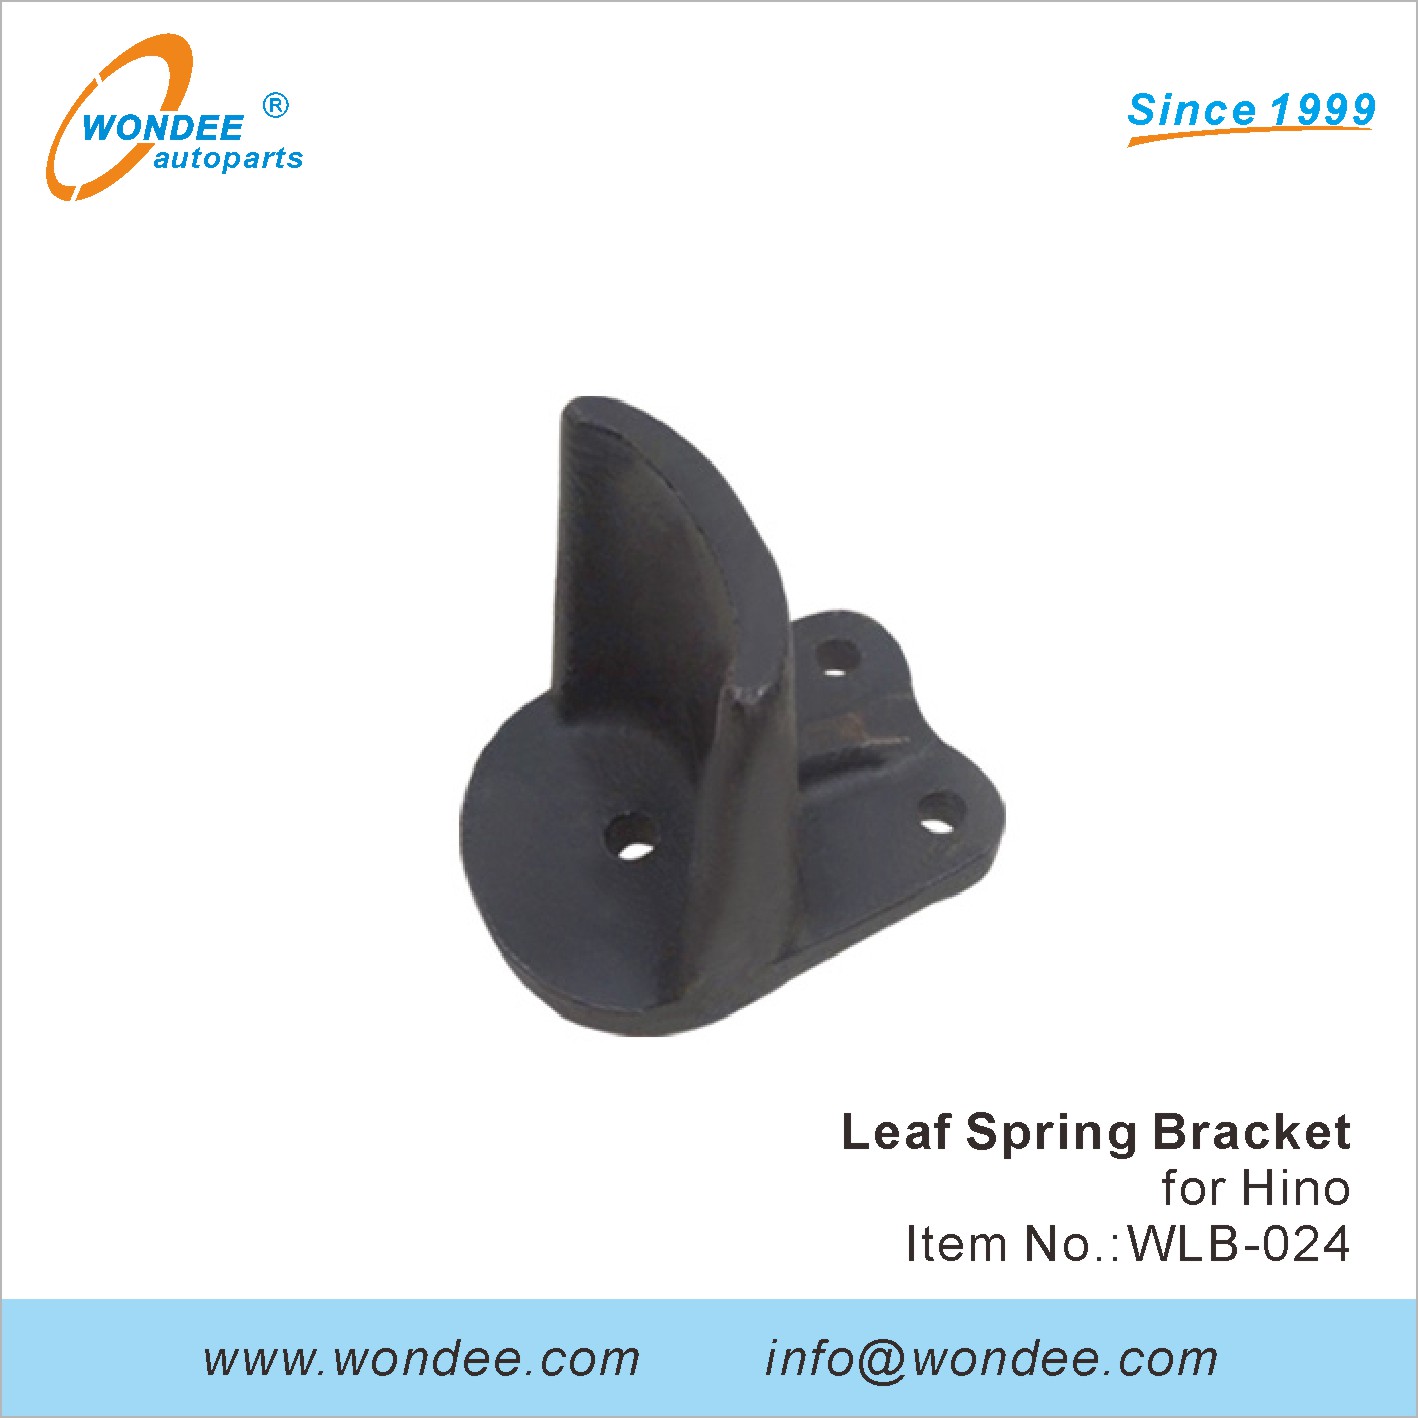 WONDEE leaf spring bracket (24)